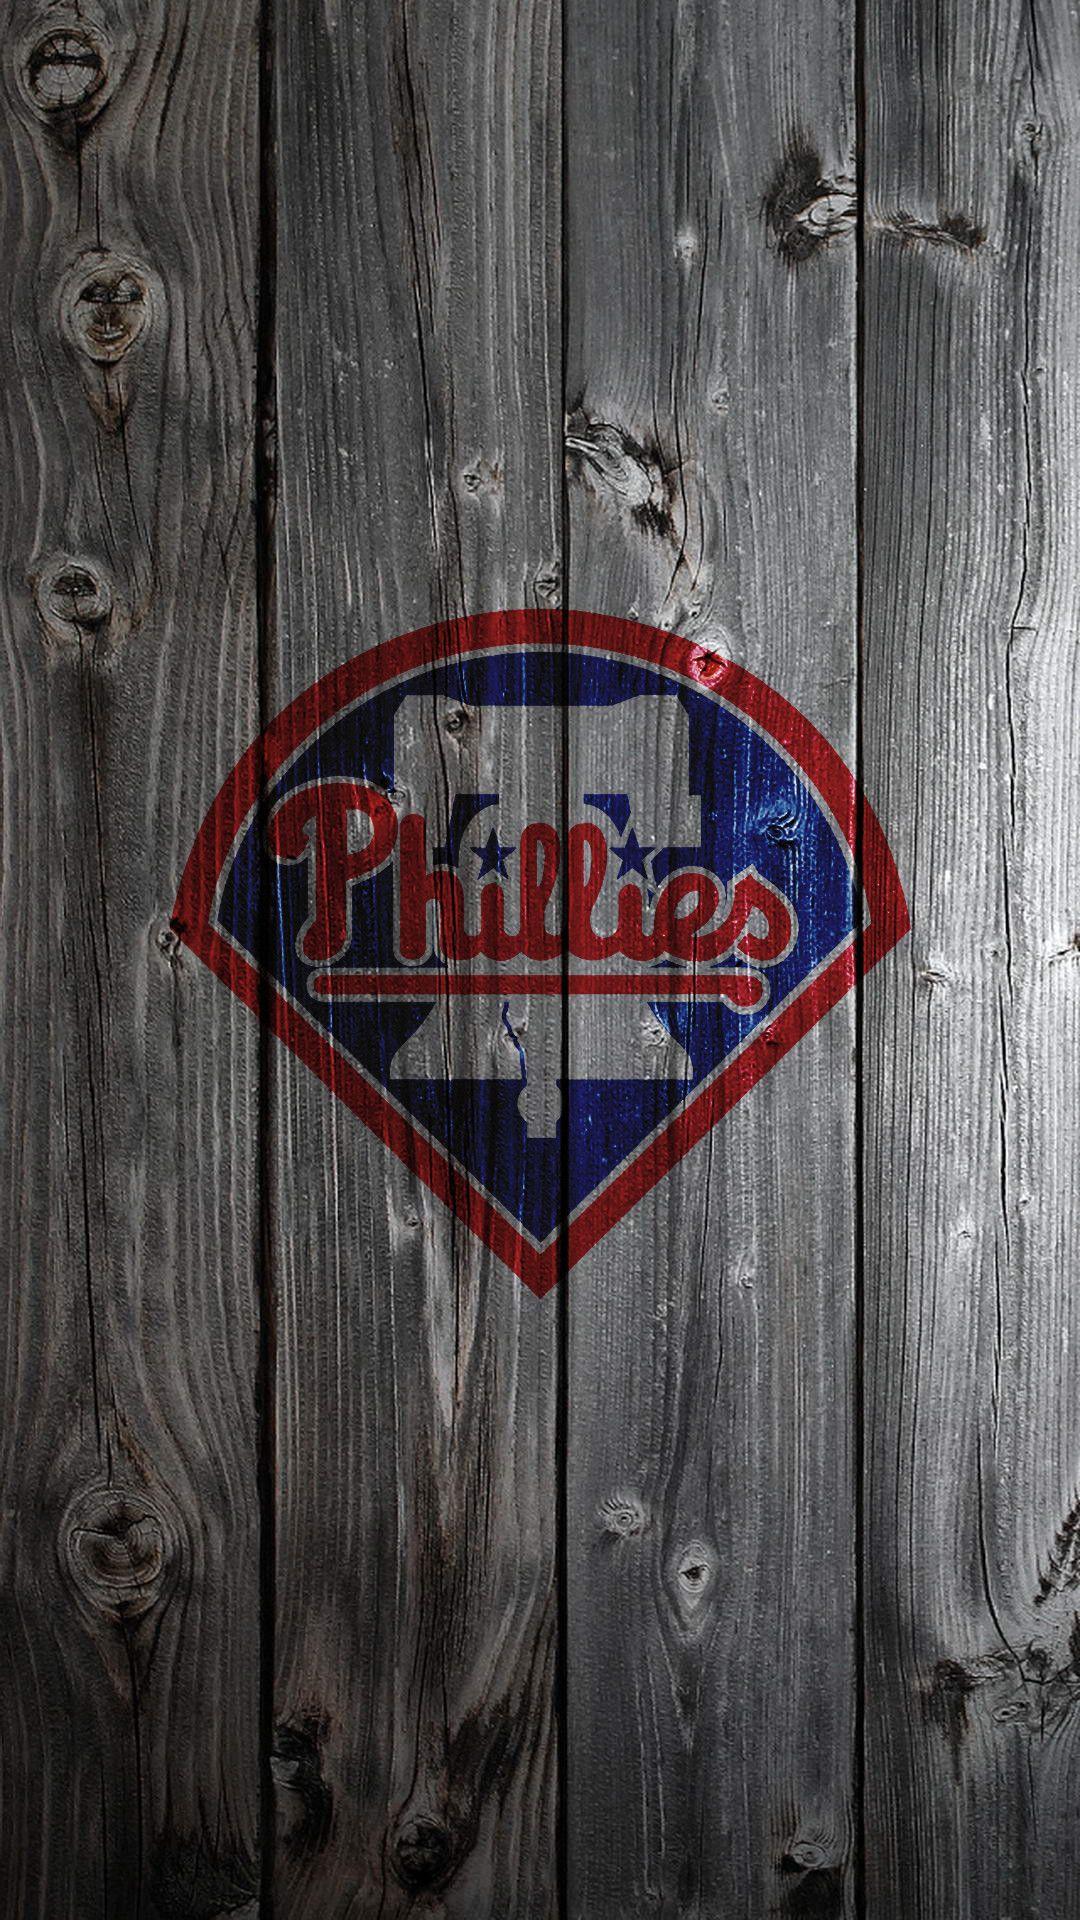 Philadelphia Phillies Wallpapers - Wallpaper Cave